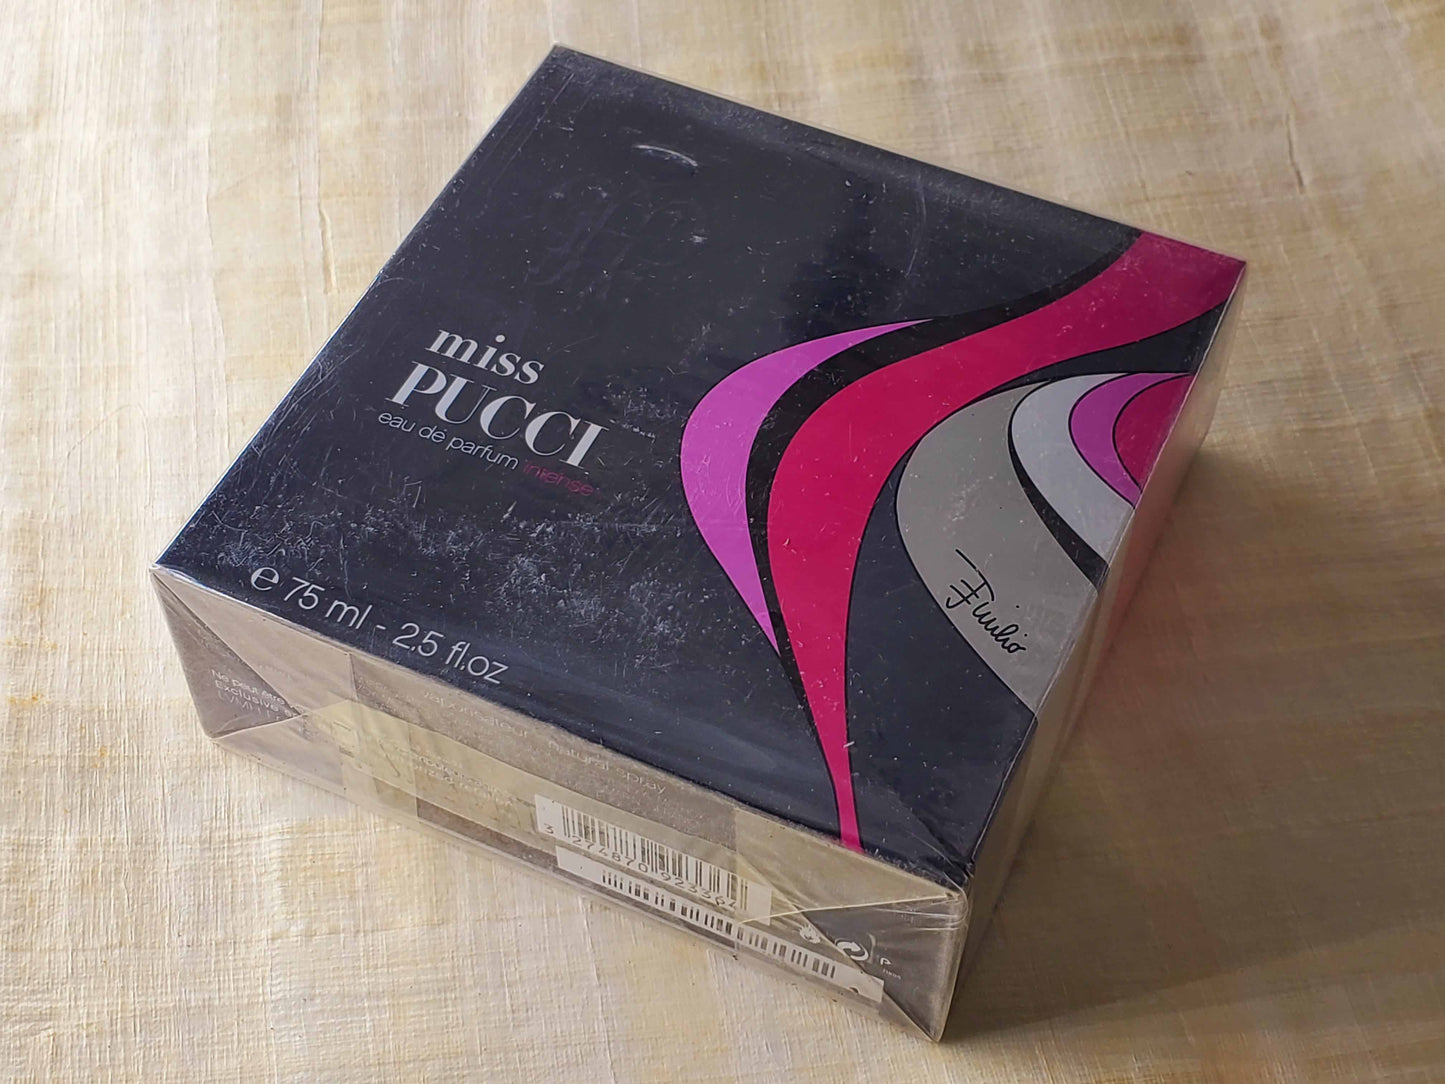 Miss Pucci Intense Emilio Pucci for women EDP Intense Spray 75 ml 2.5 oz, Rare, Vintage, Sealed